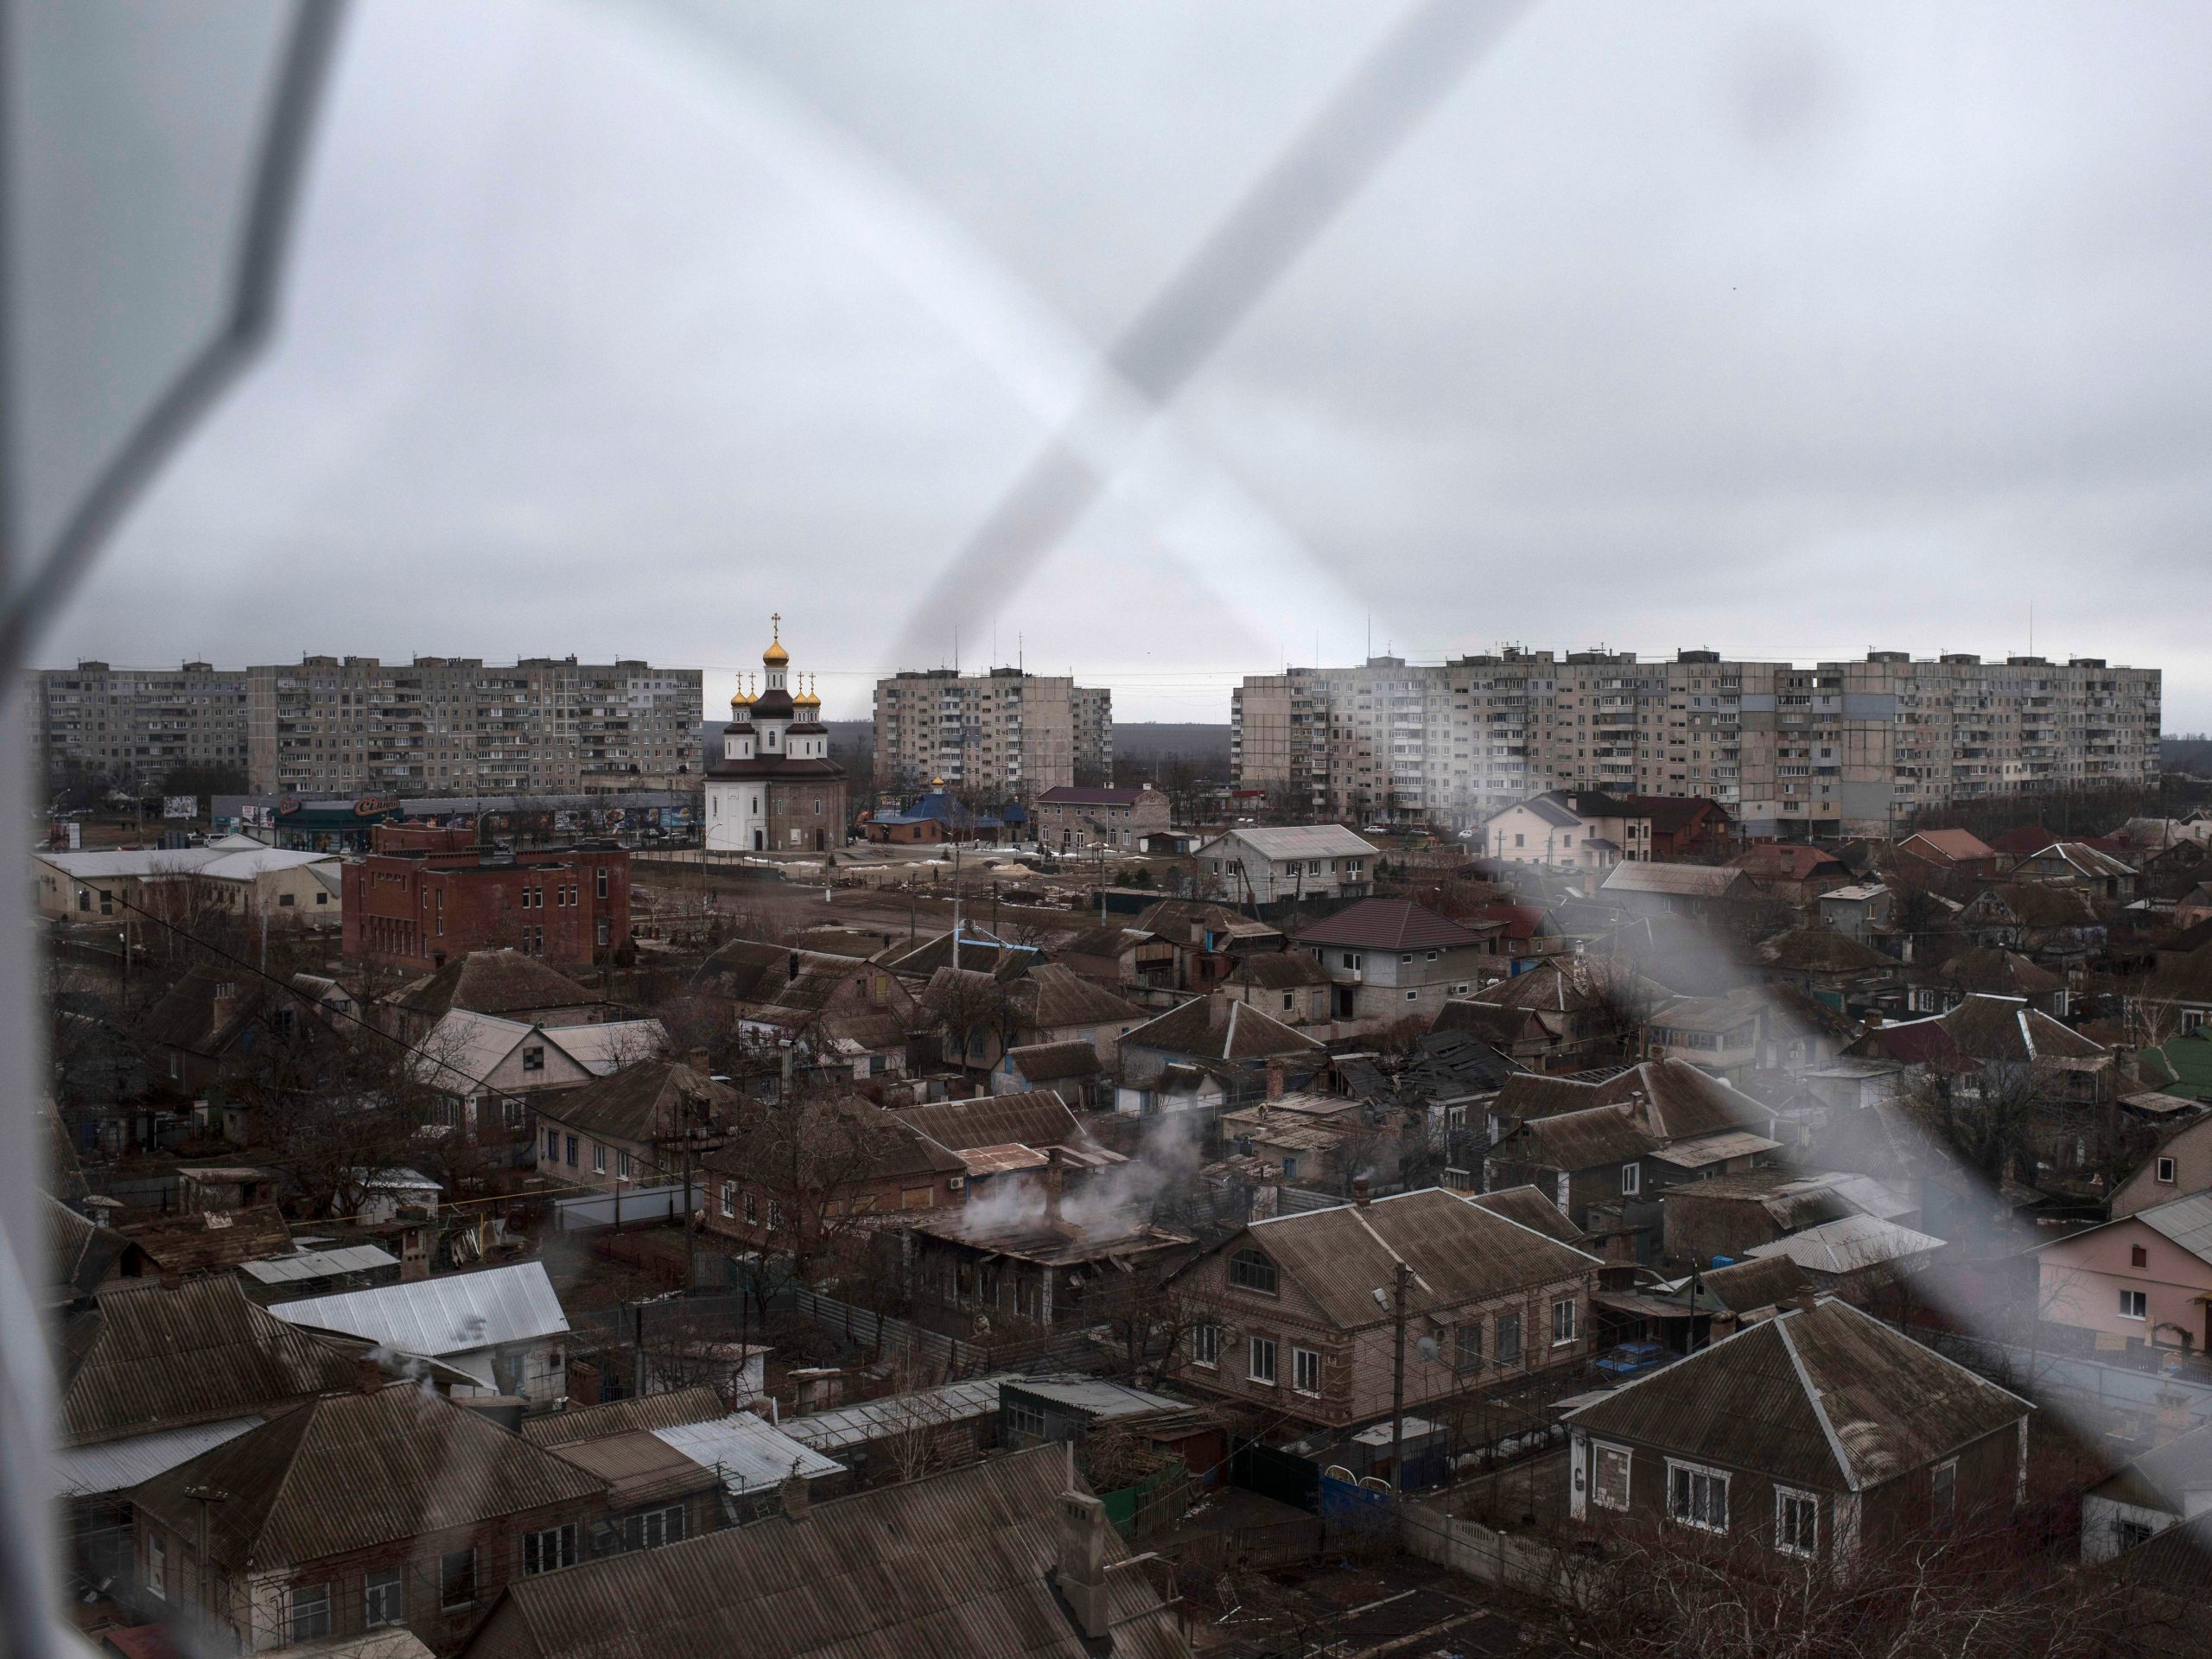 Vostochniy district of Mariupol, Ukraine, on January 26, 2015.